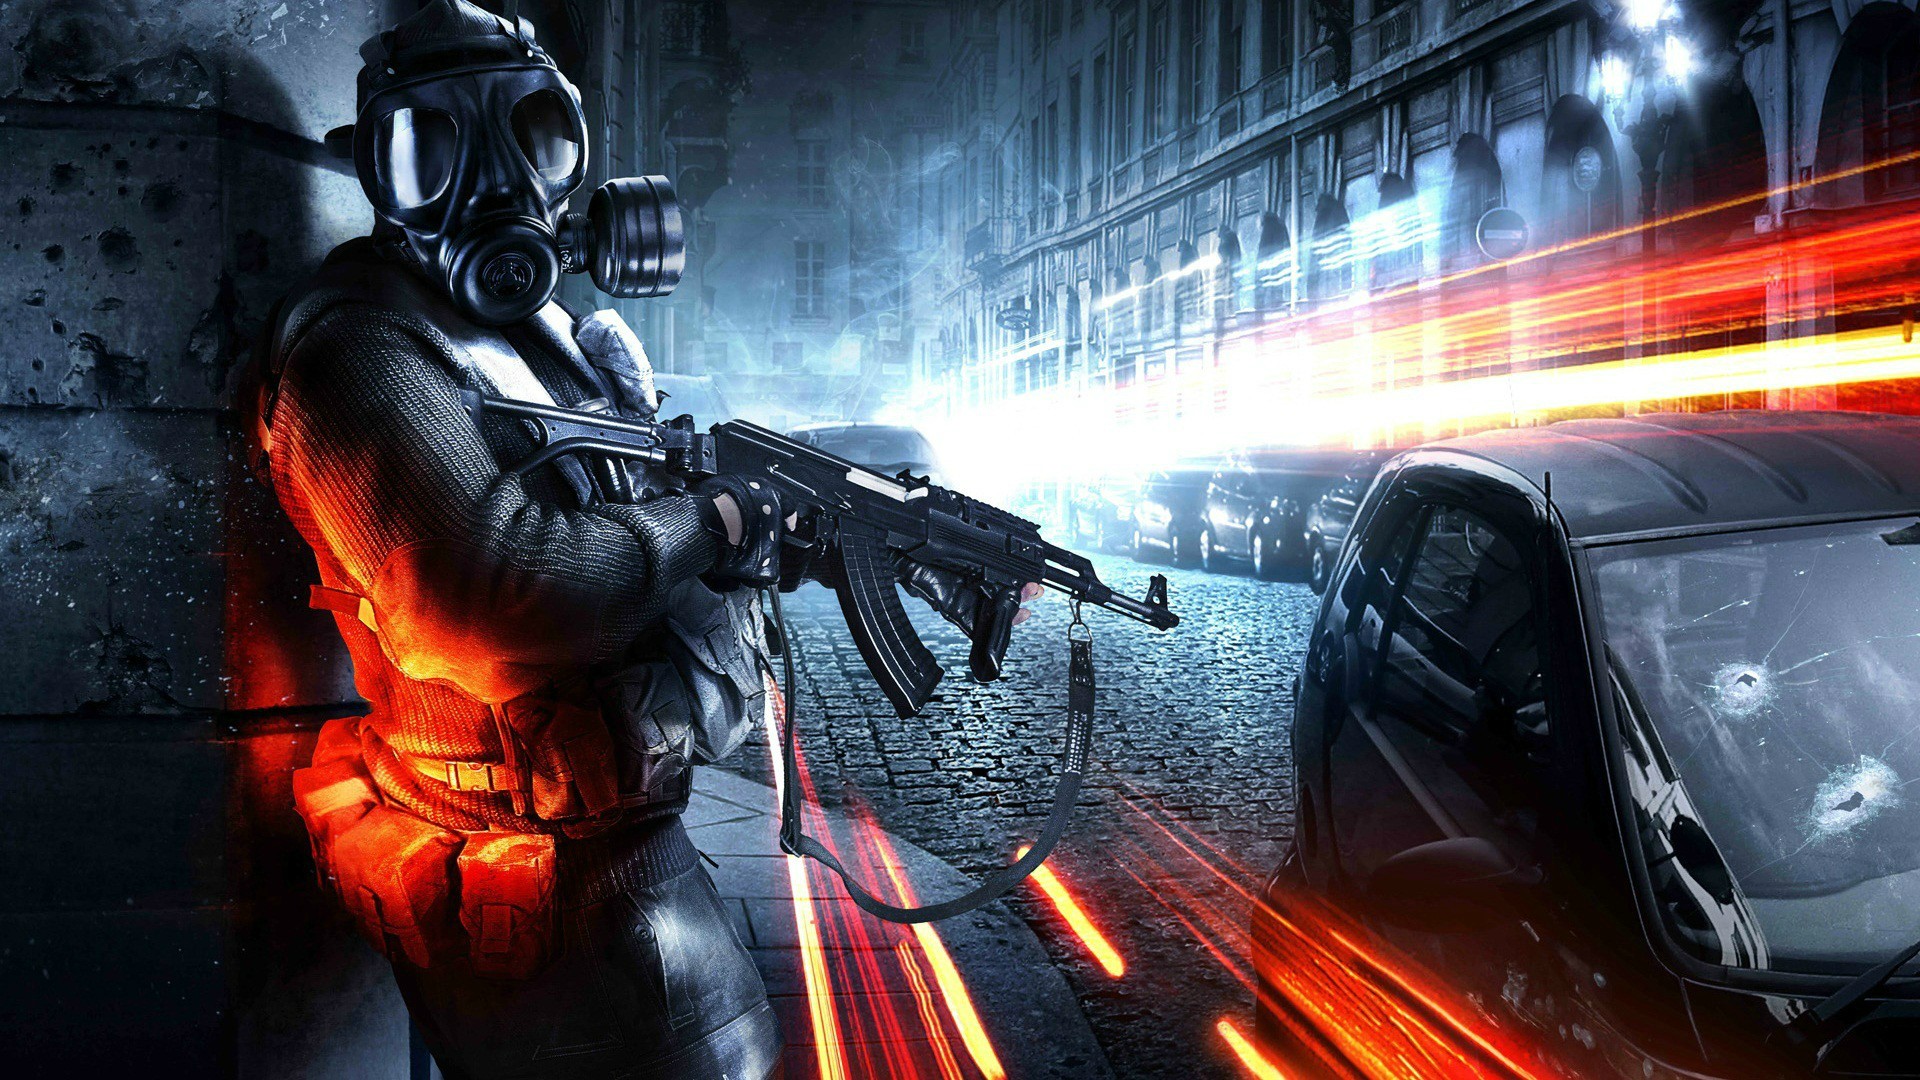 Video Game Battlefield 3 HD Wallpaper | Background Image